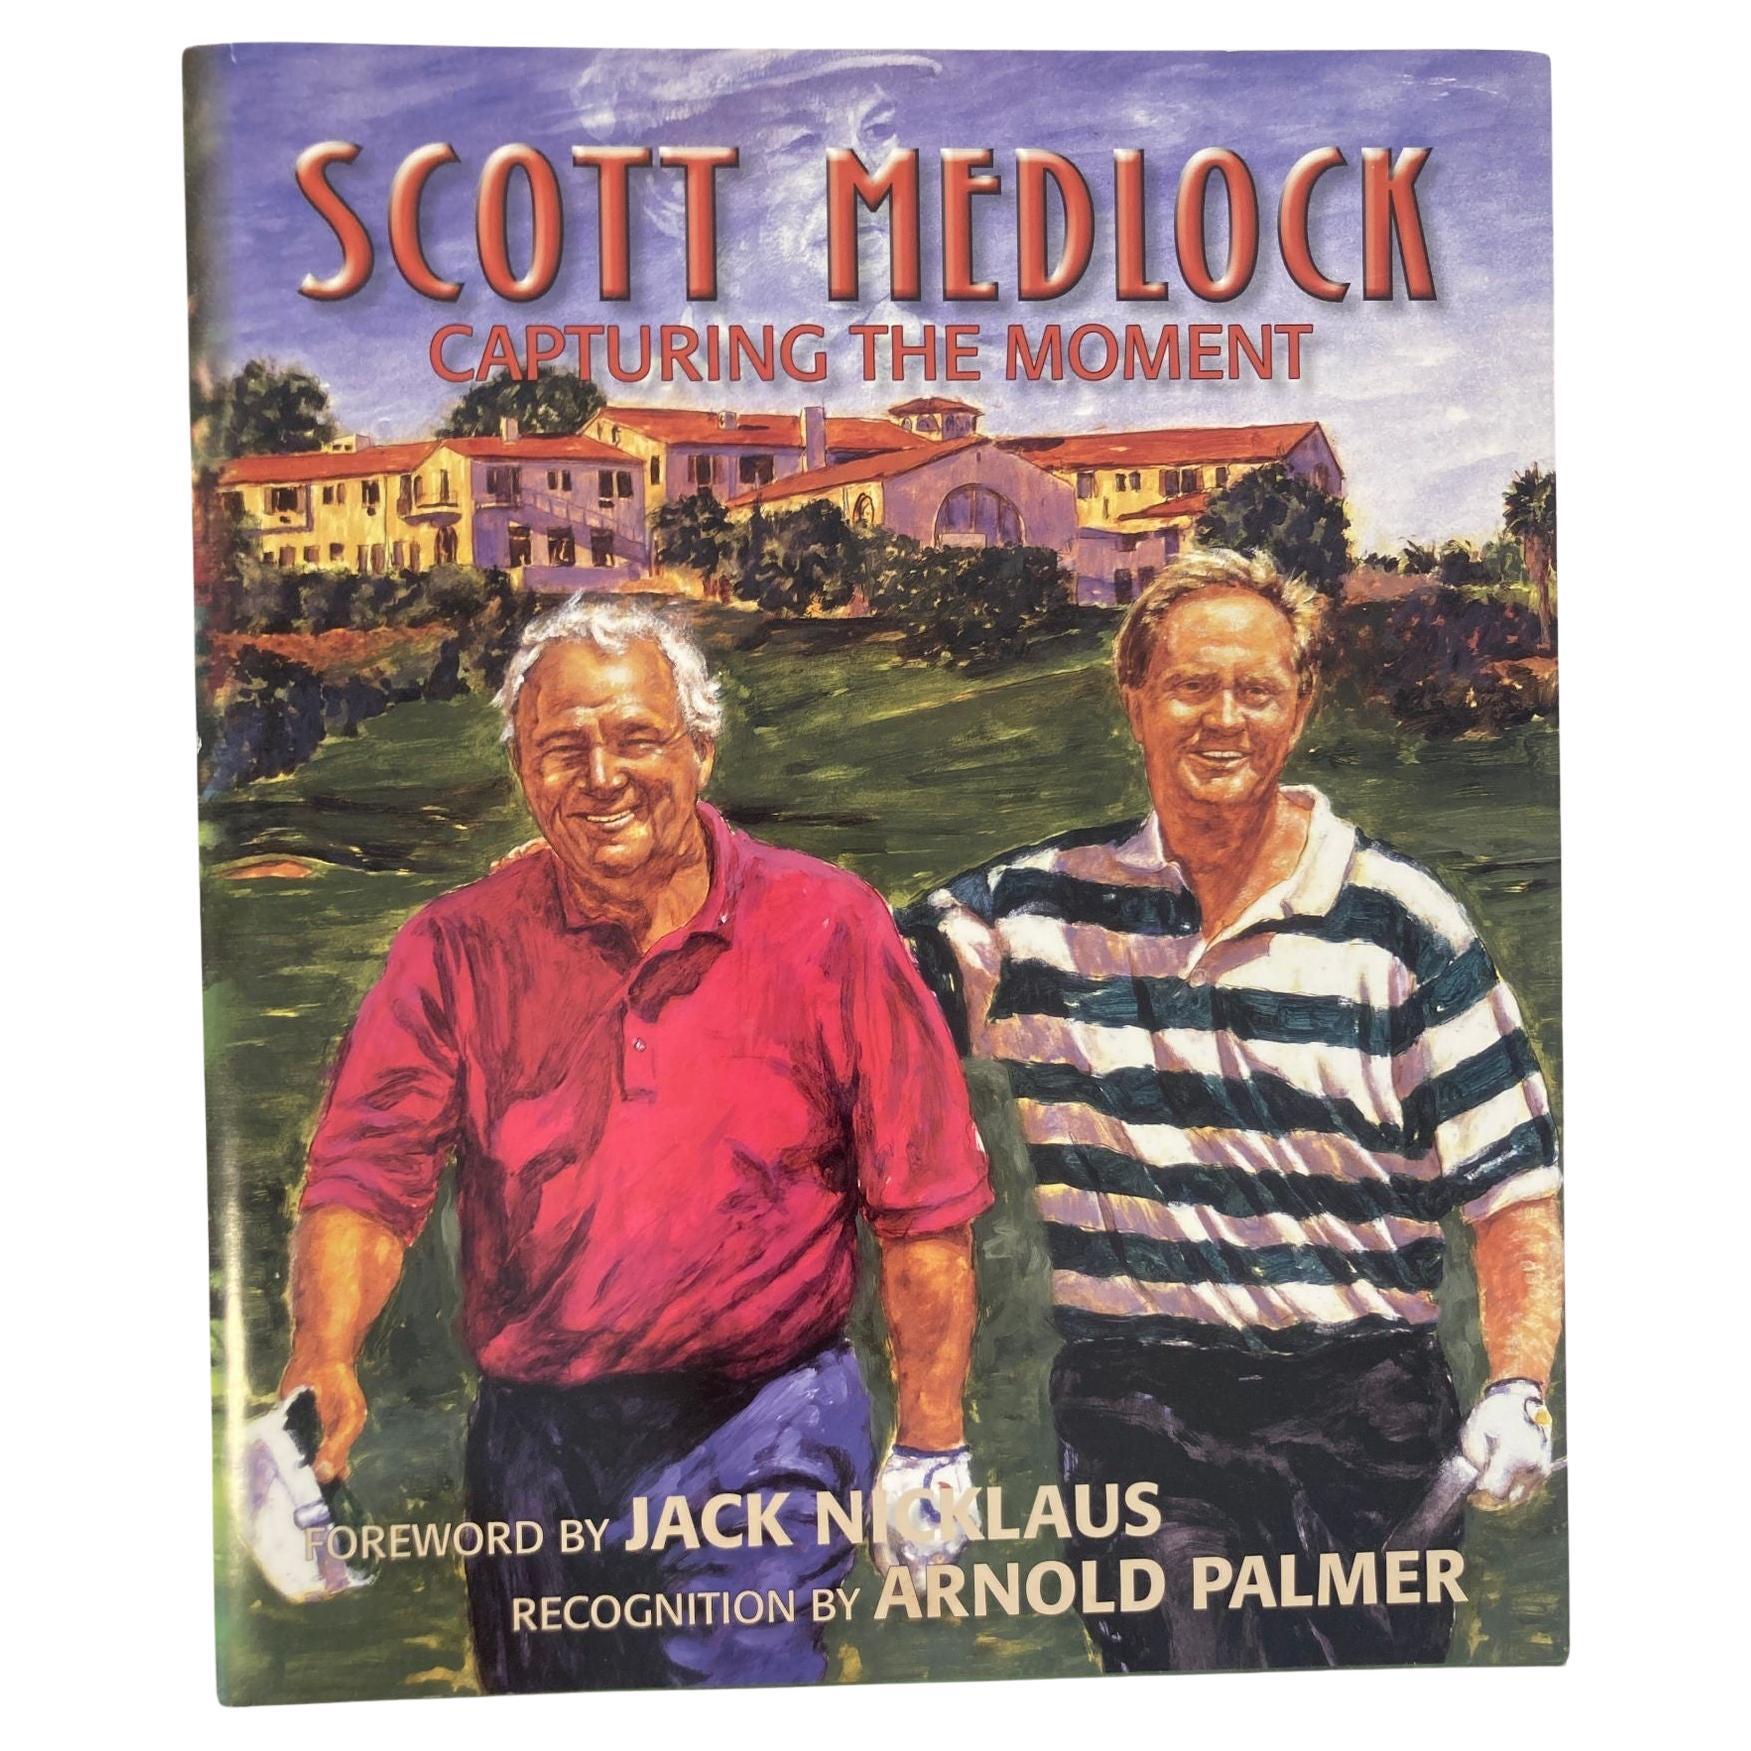 Scott Medlock Capturing the Moment, Hardcoverbuch, 2010, signiert